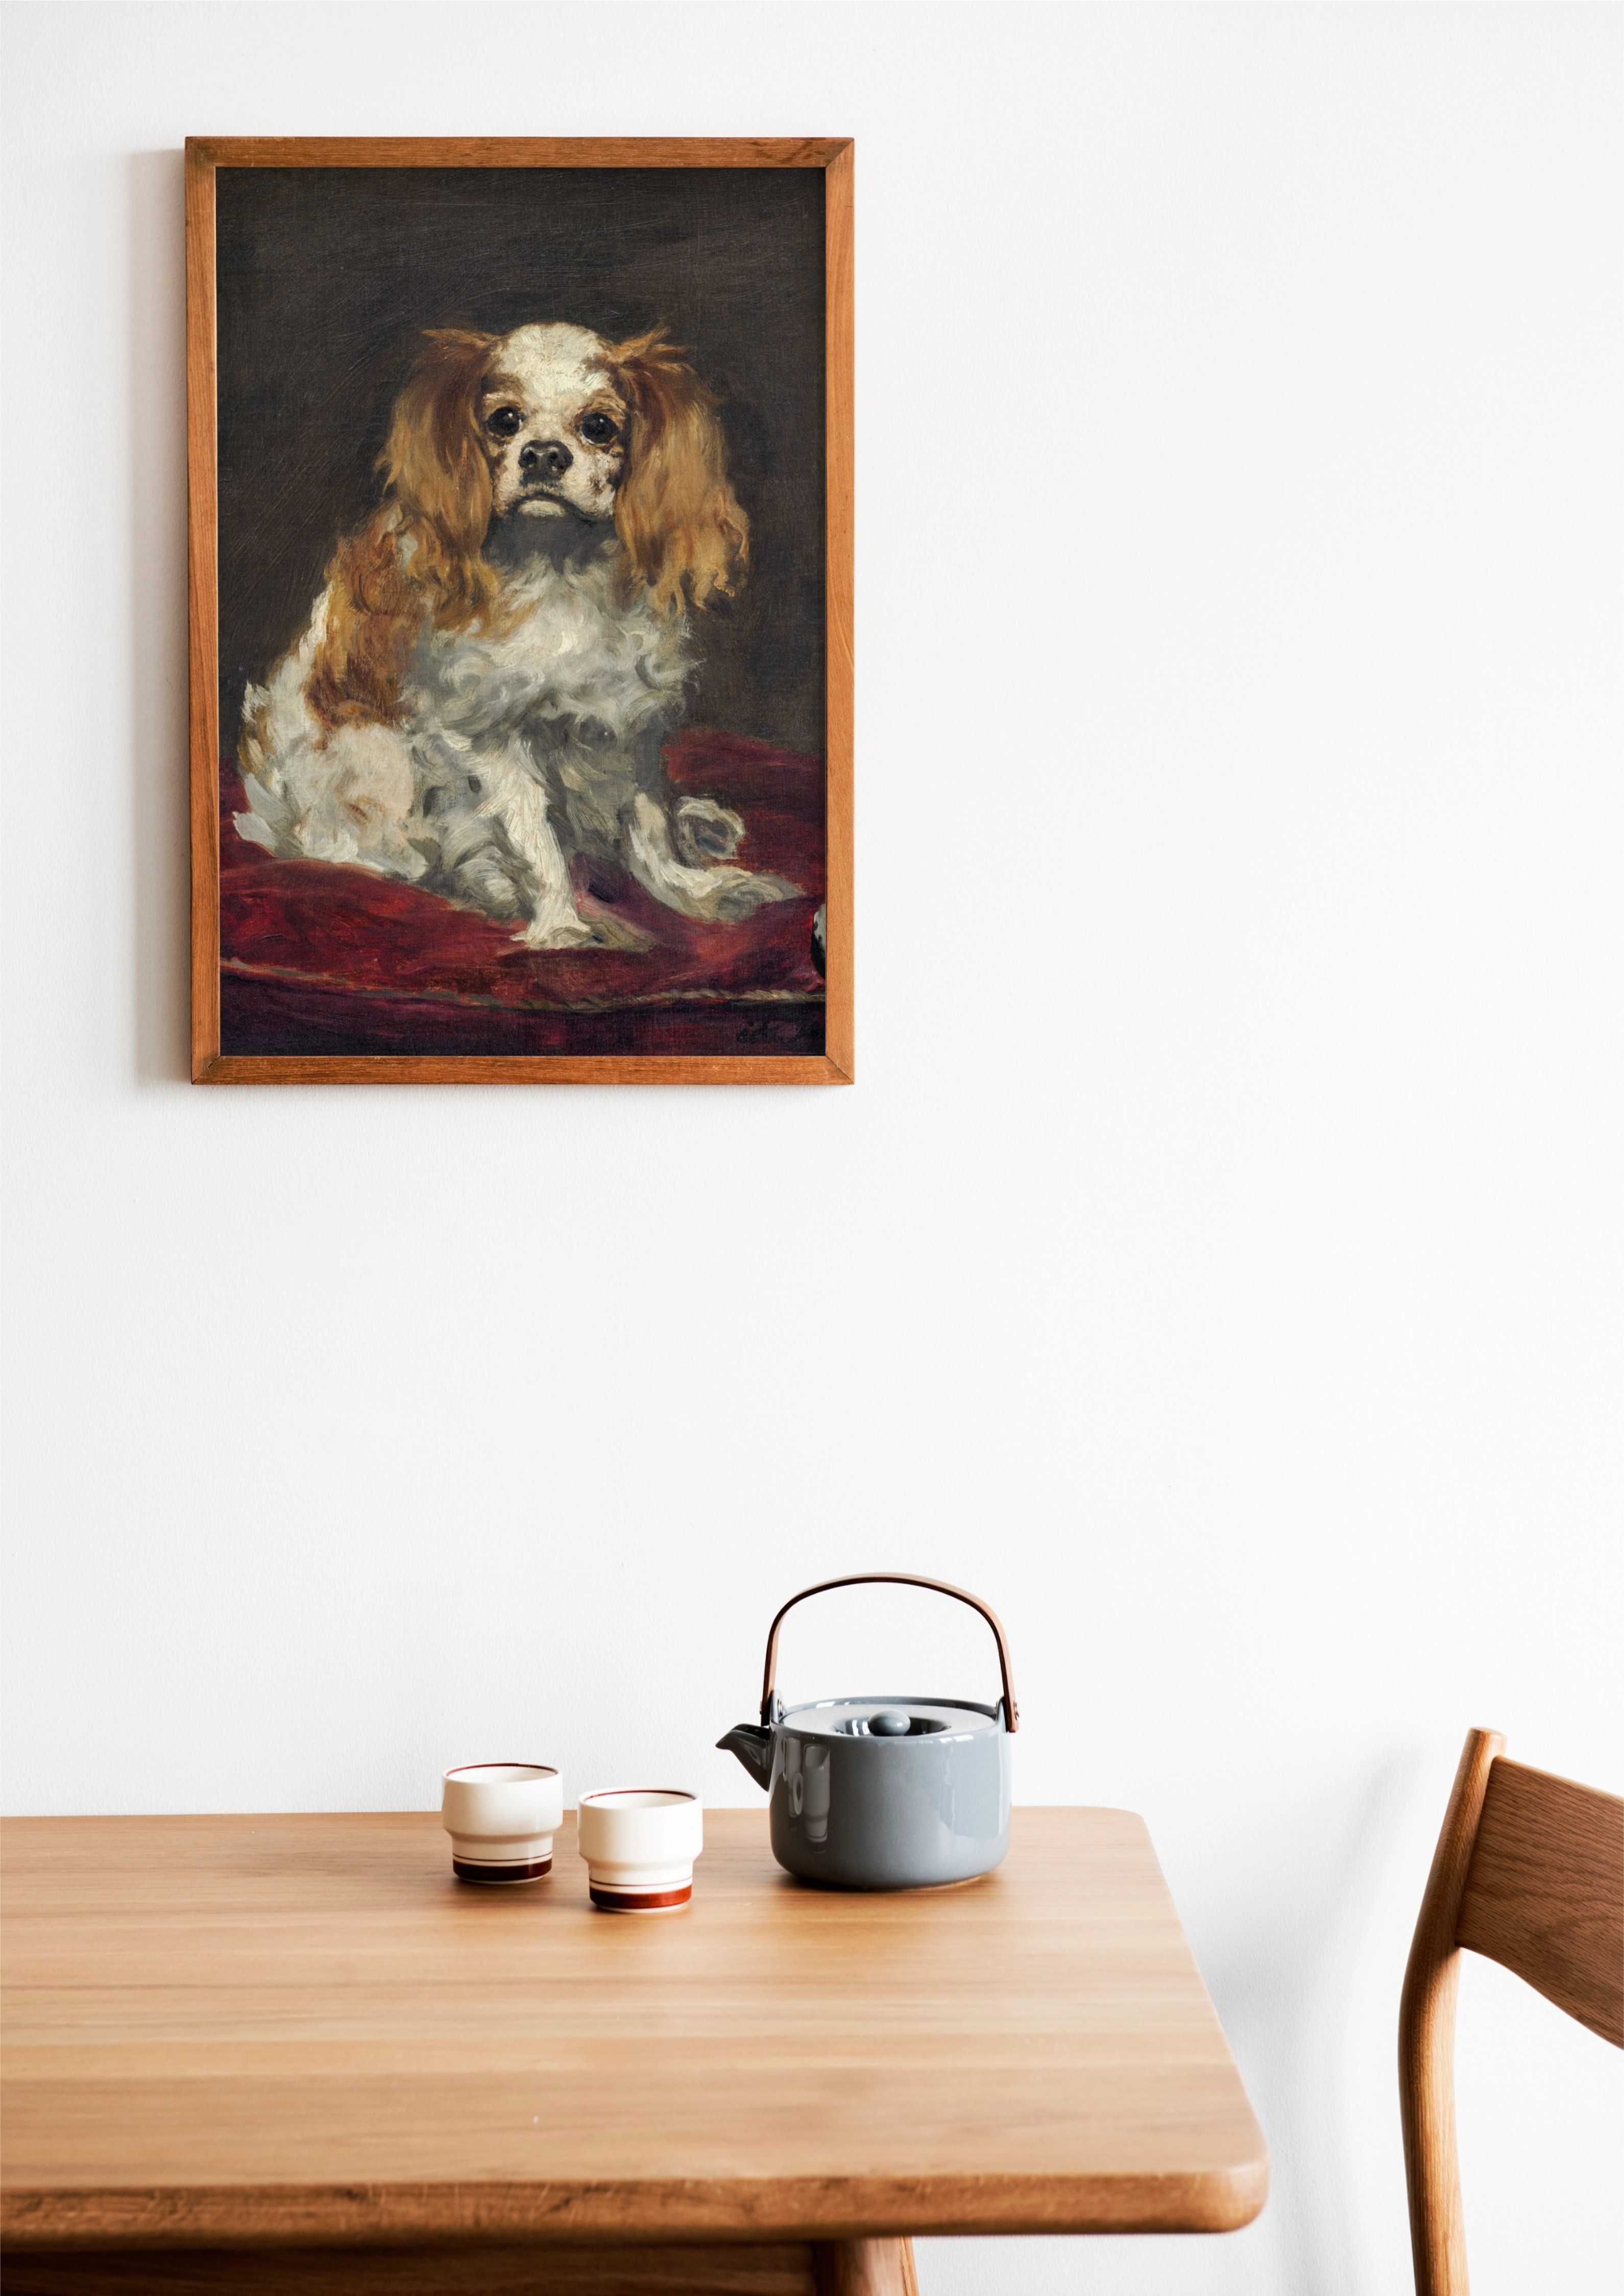 Plakat A3 A King Charles Spaniel - Obraz pies wydruk Manet#1